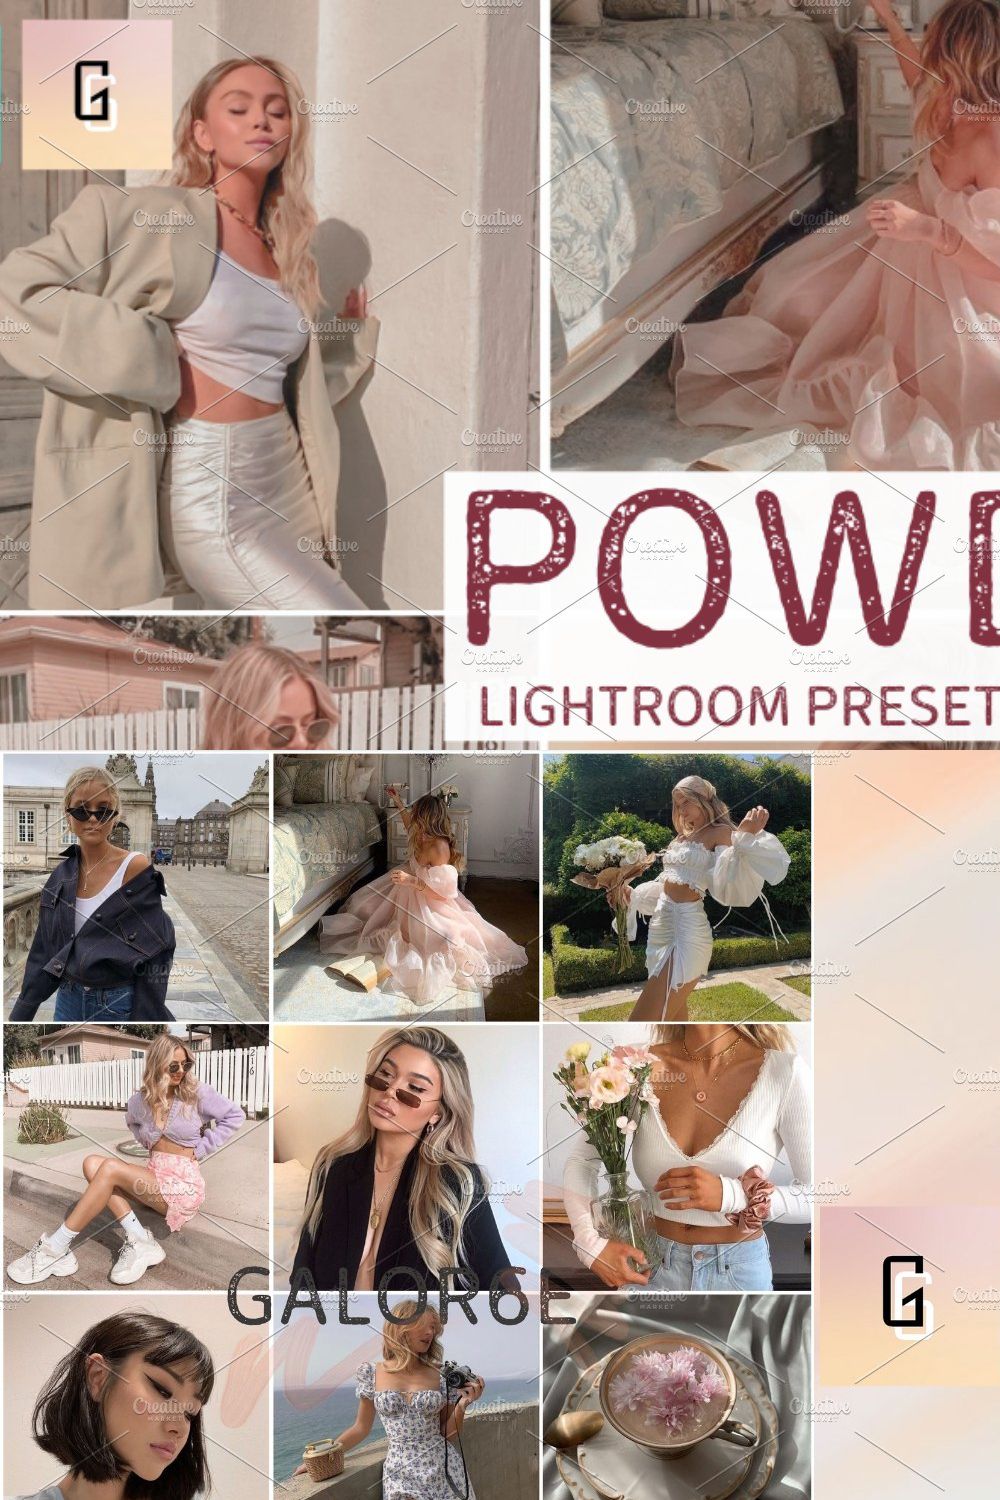 Lightroom Preset POWDER by GALOR6E pinterest preview image.